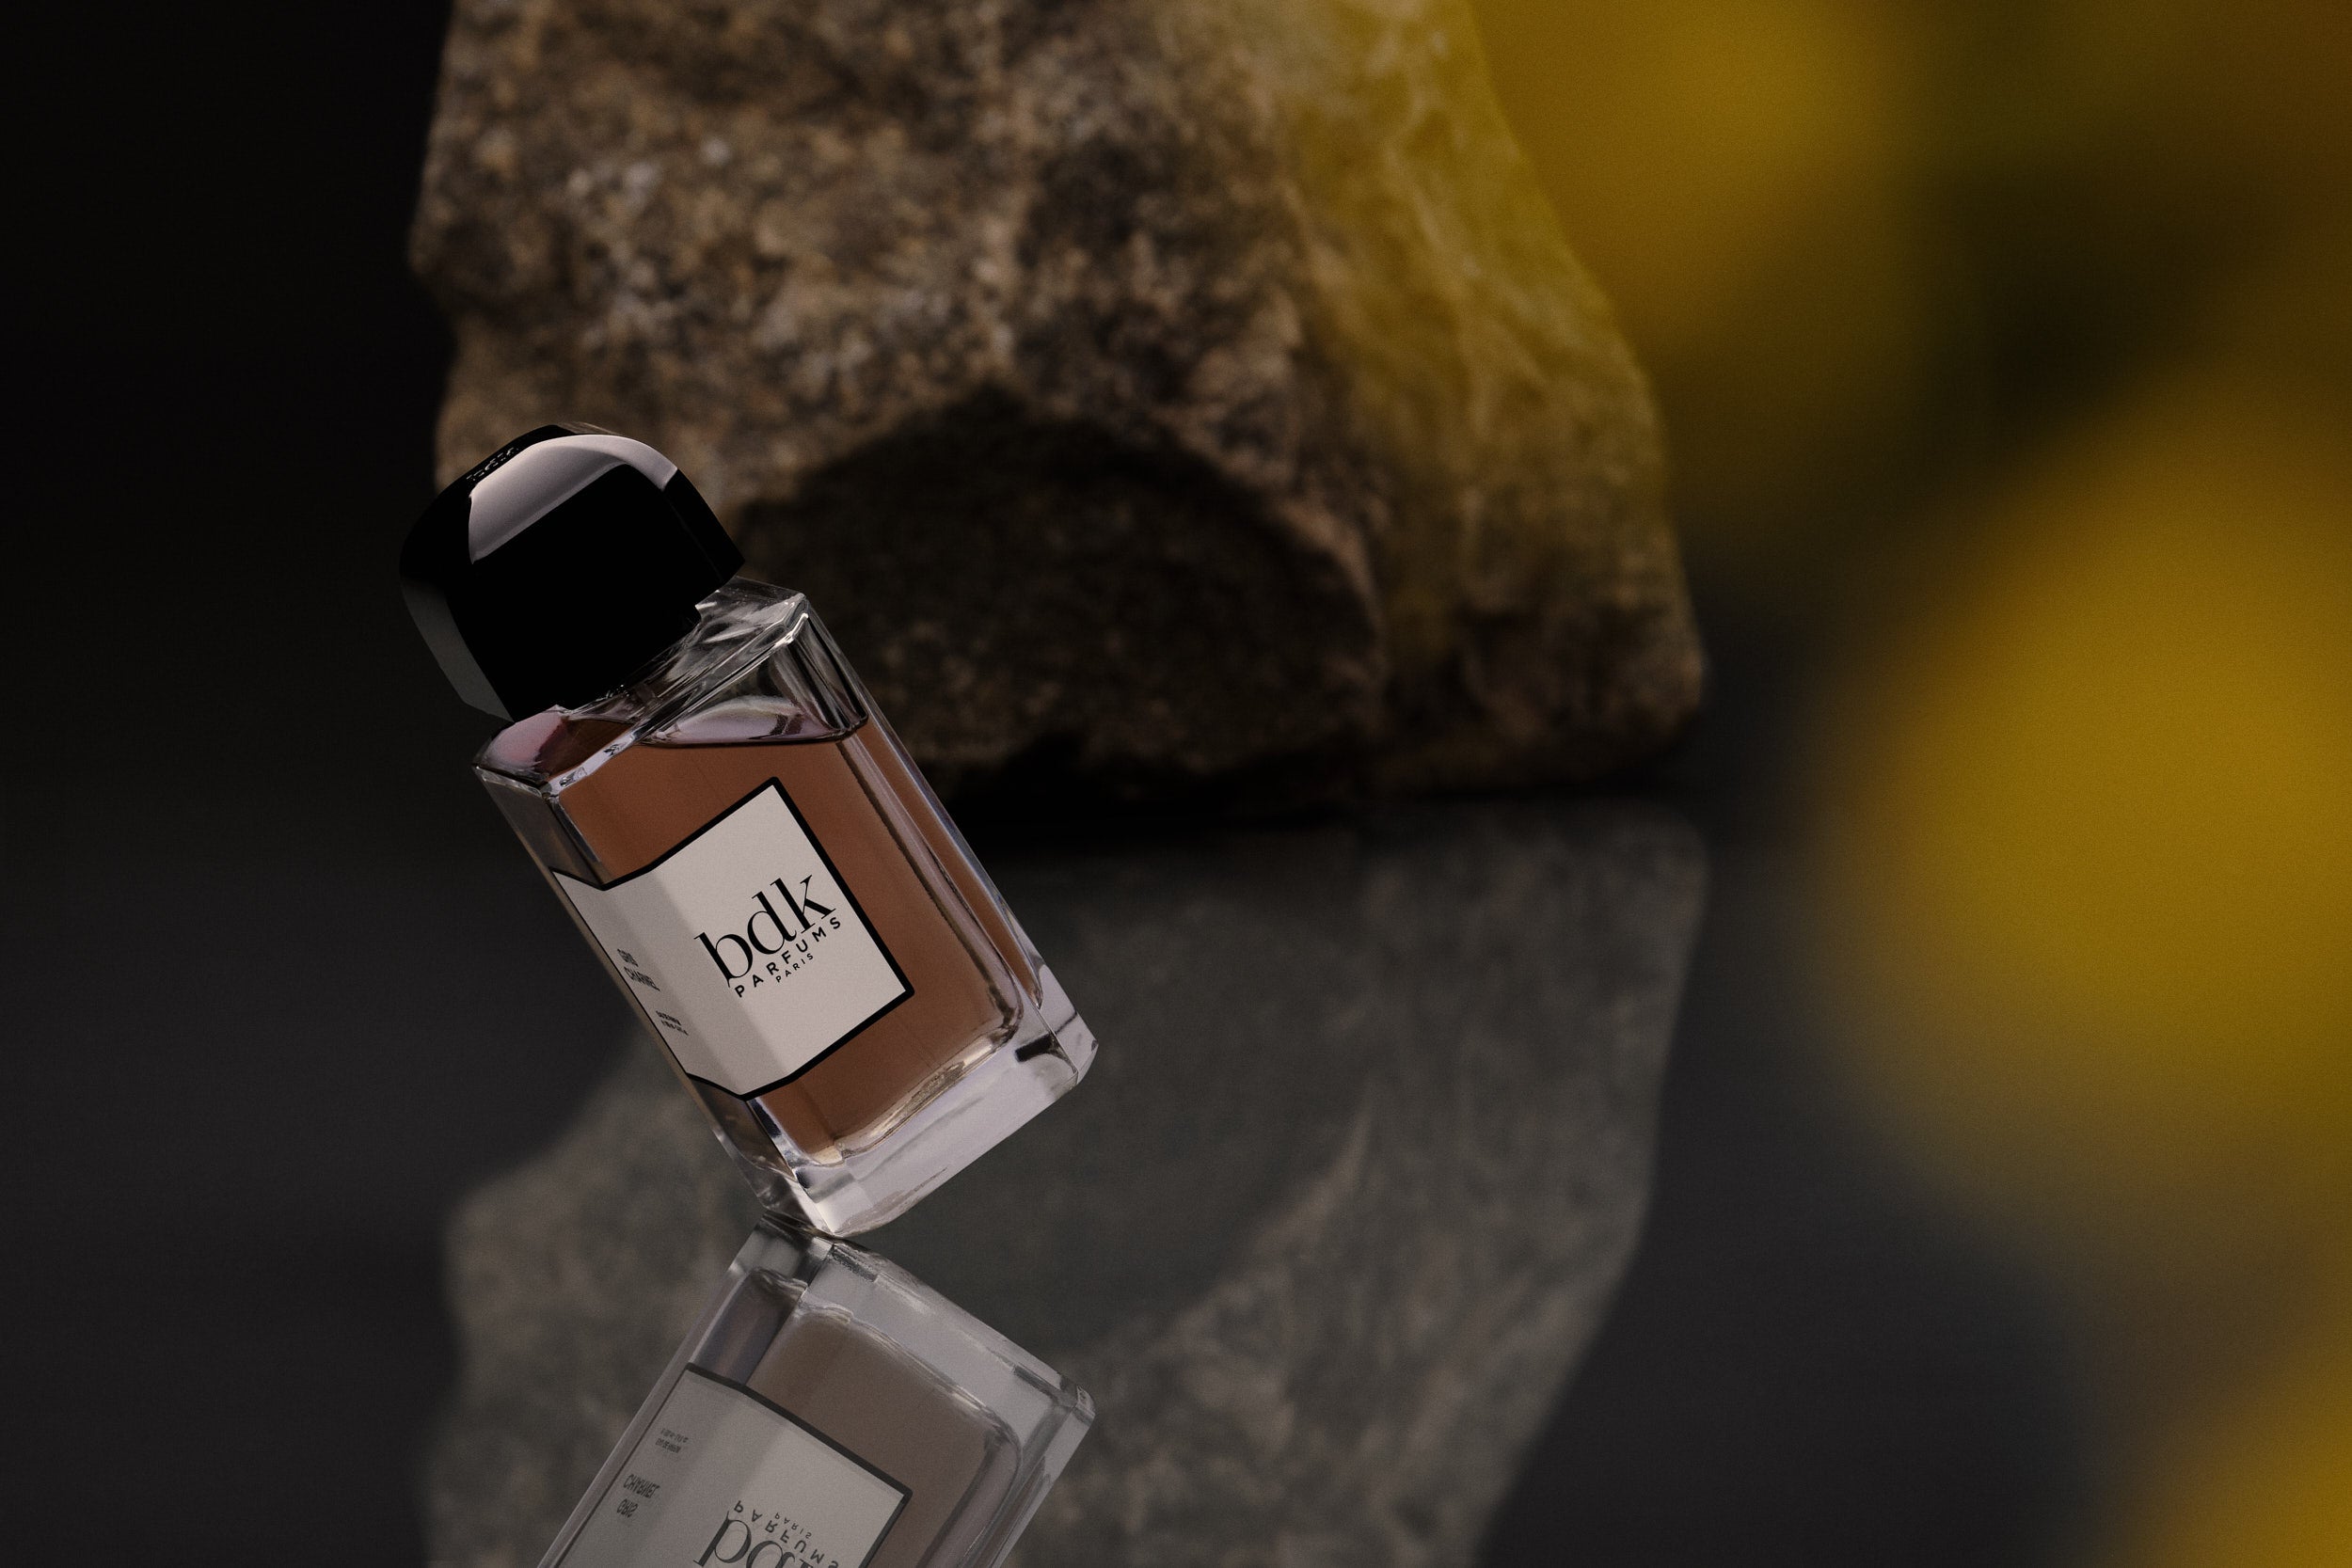 BDK Parfums Pas Ce Soir Extrait: A New Gourmand Take